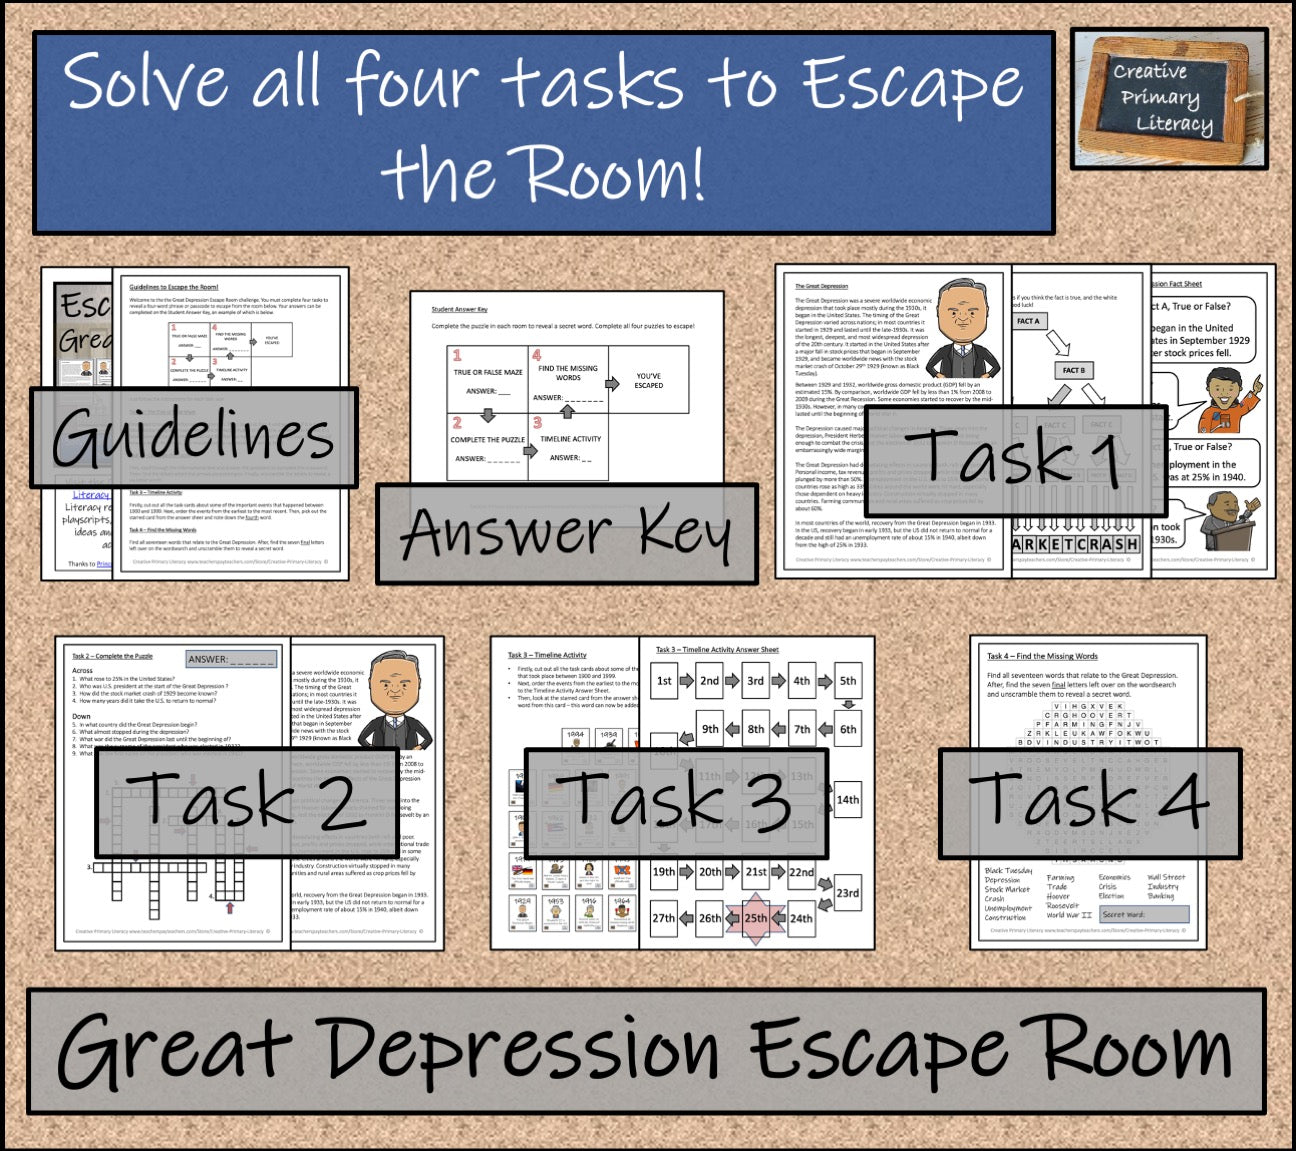 The Great Depression Escape Room Activity